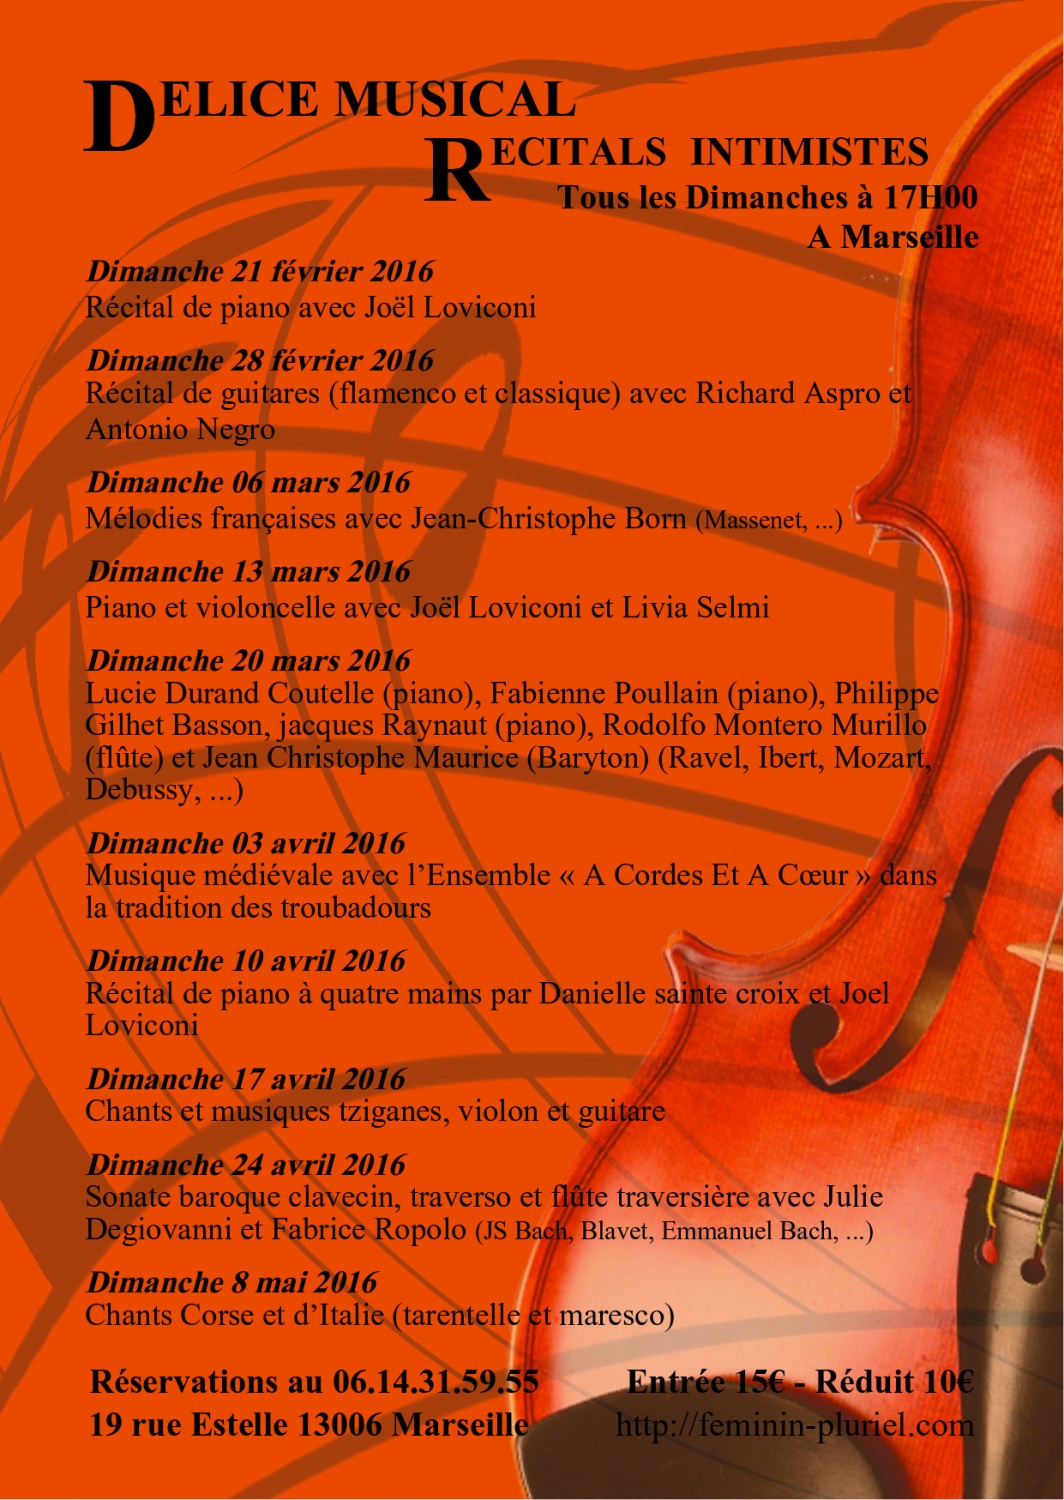 Programmation musicale rÃ©citals intimistes 2015/2016 Marseille FÃ©minin Pluriel